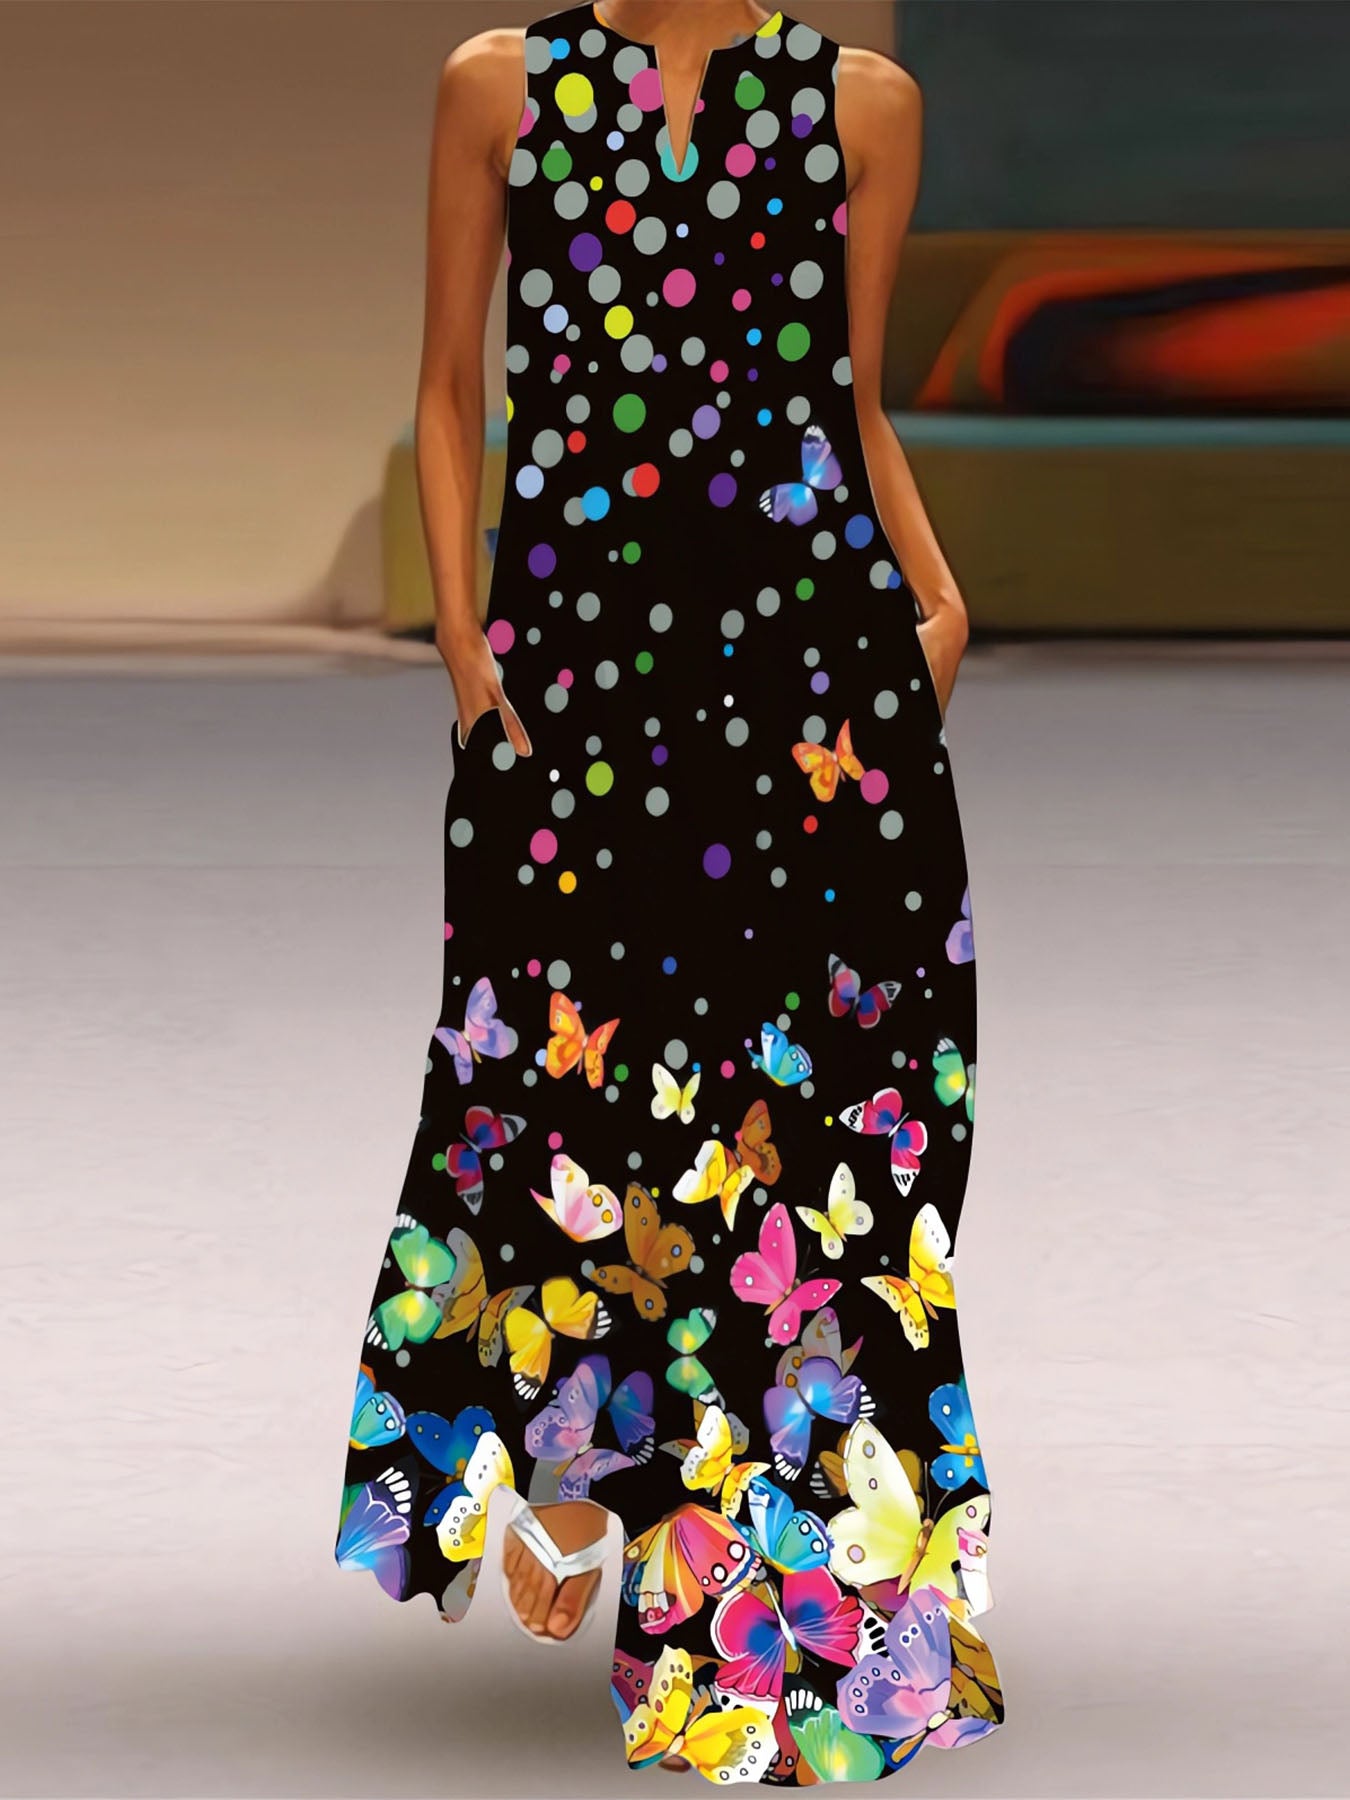 Vorioal Polka Dot Butterfly Dress